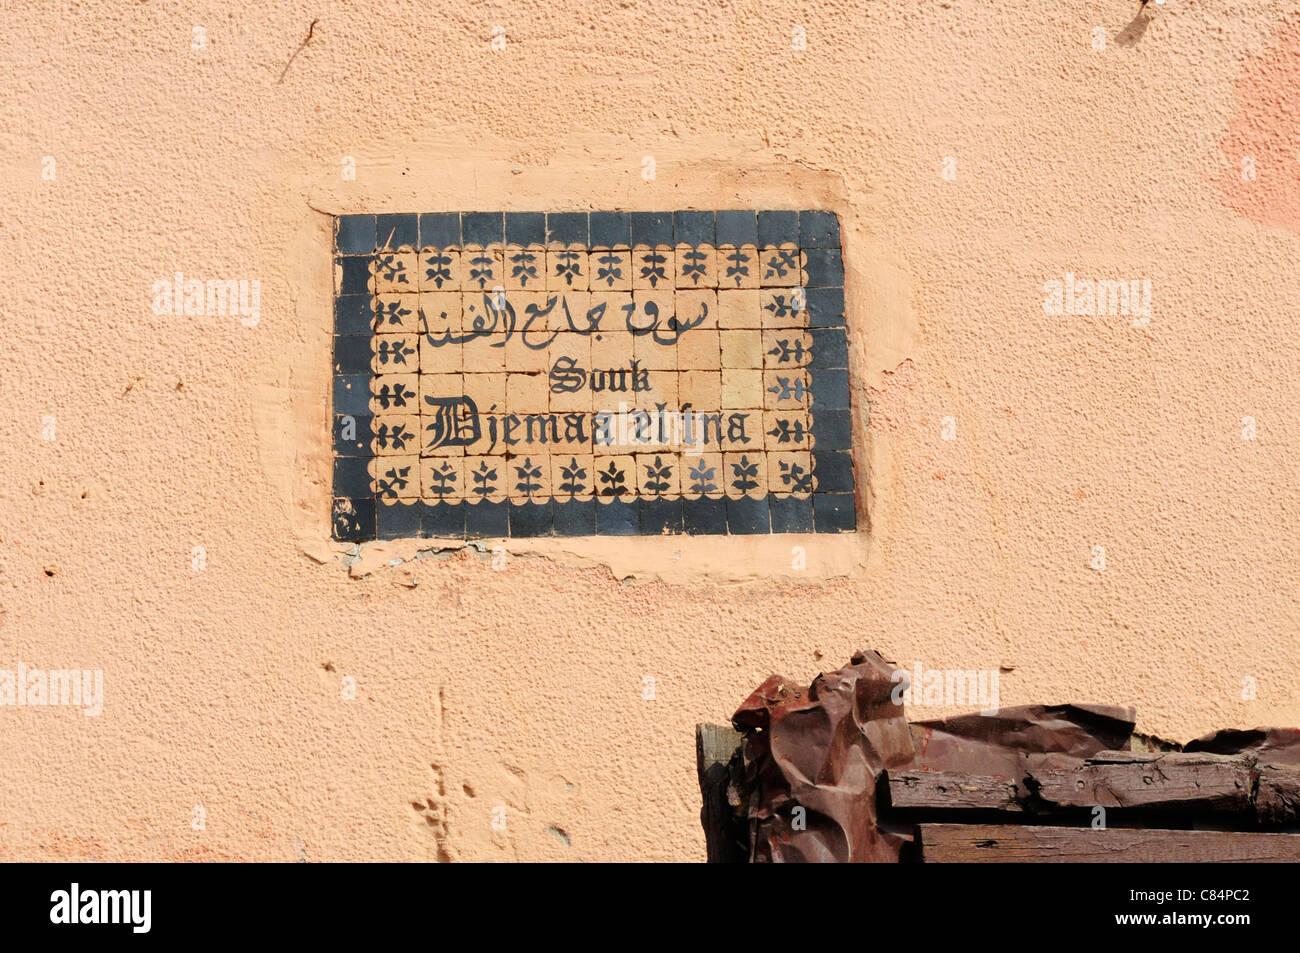 Souk Djemaa el Fna Sign, Marrakech, Morocco Stock Photo